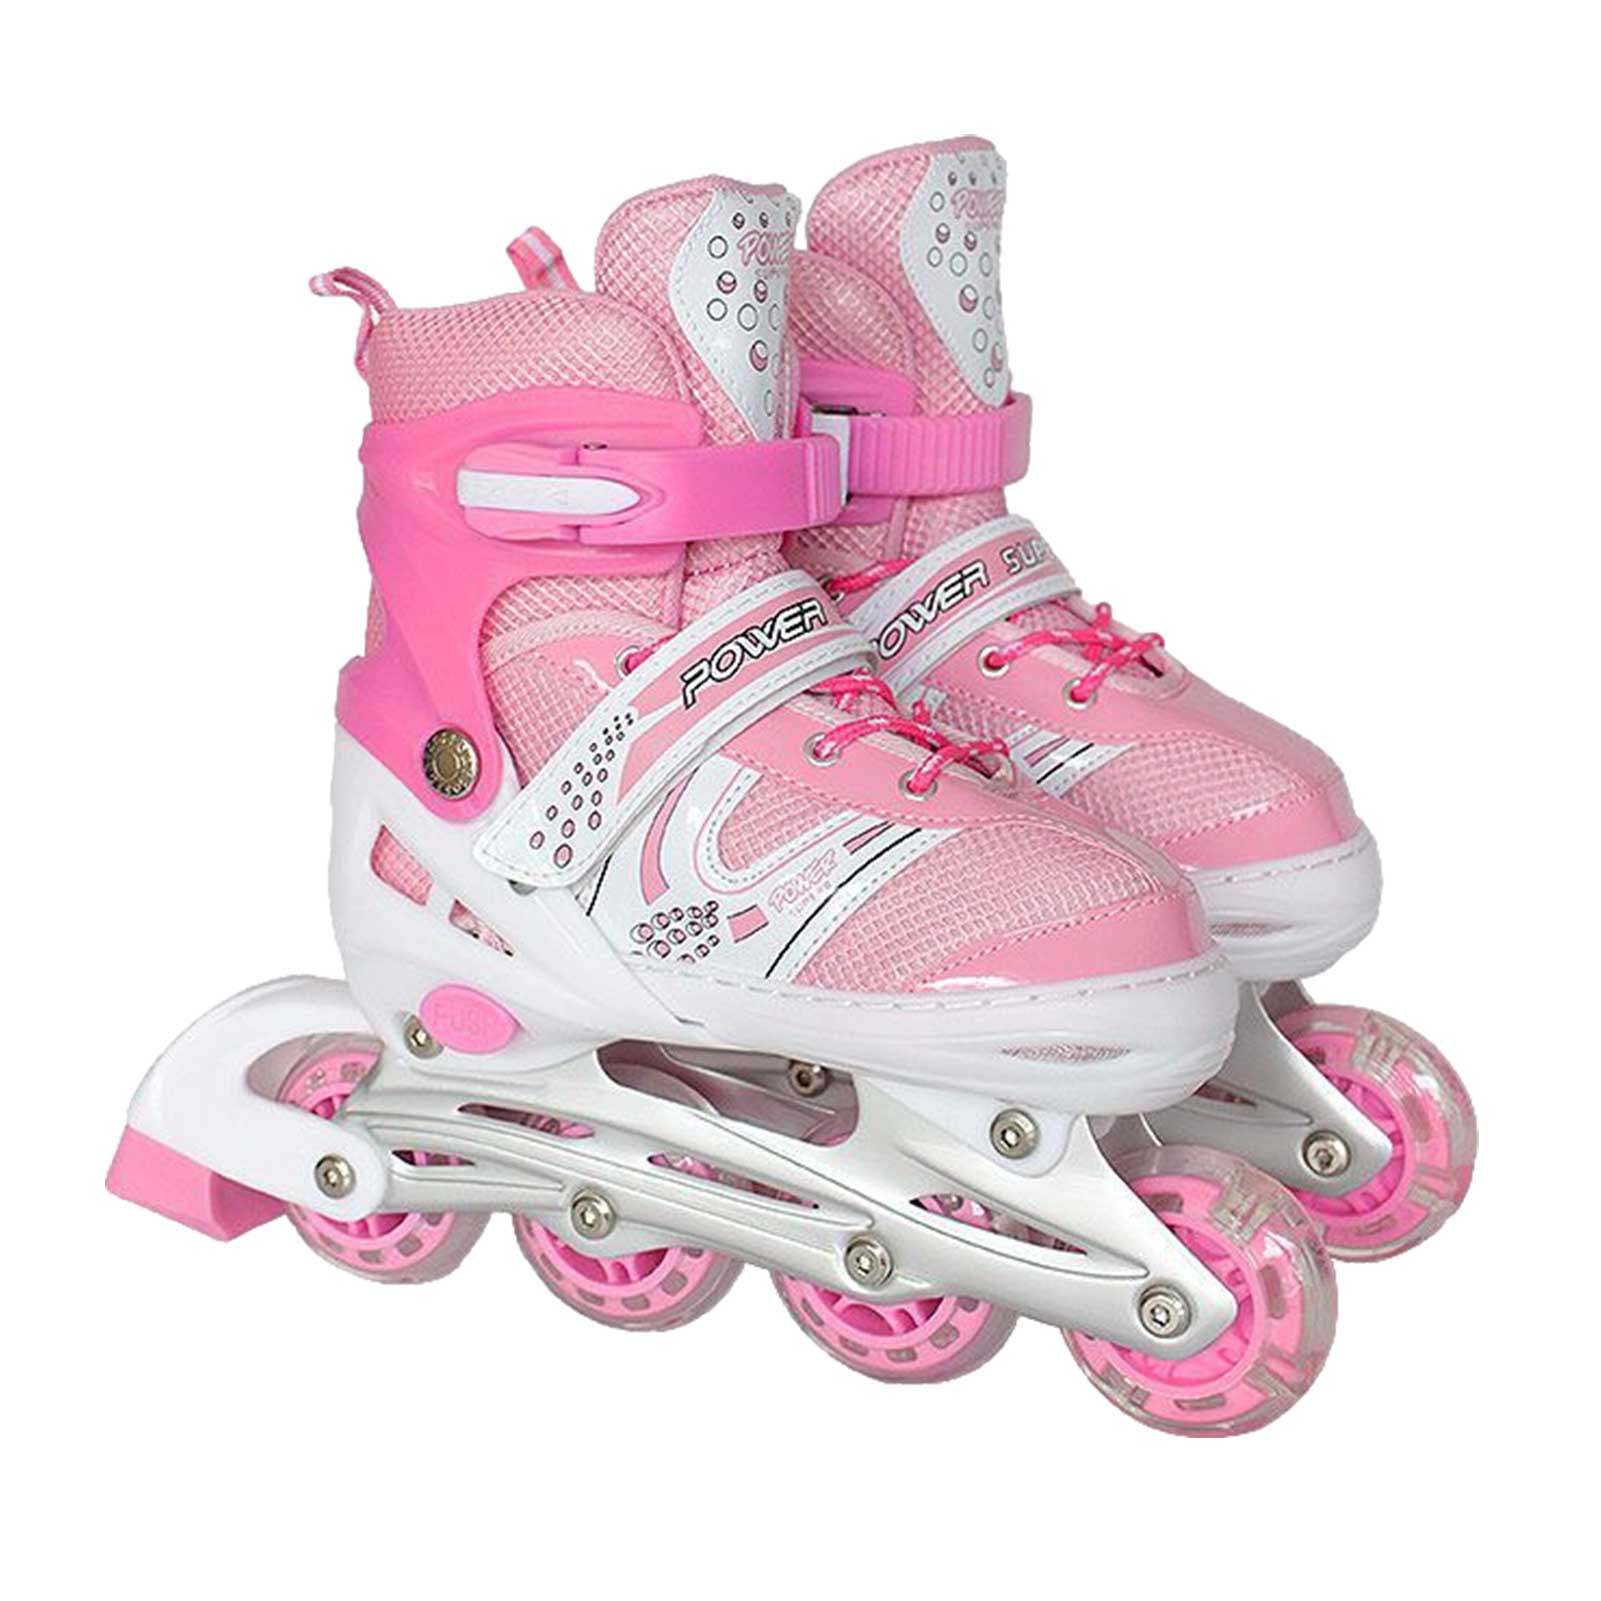 Details about   Pink Inline Skates With Flashing Wheels Kids Boys Girls Adjustable Roller Blades 